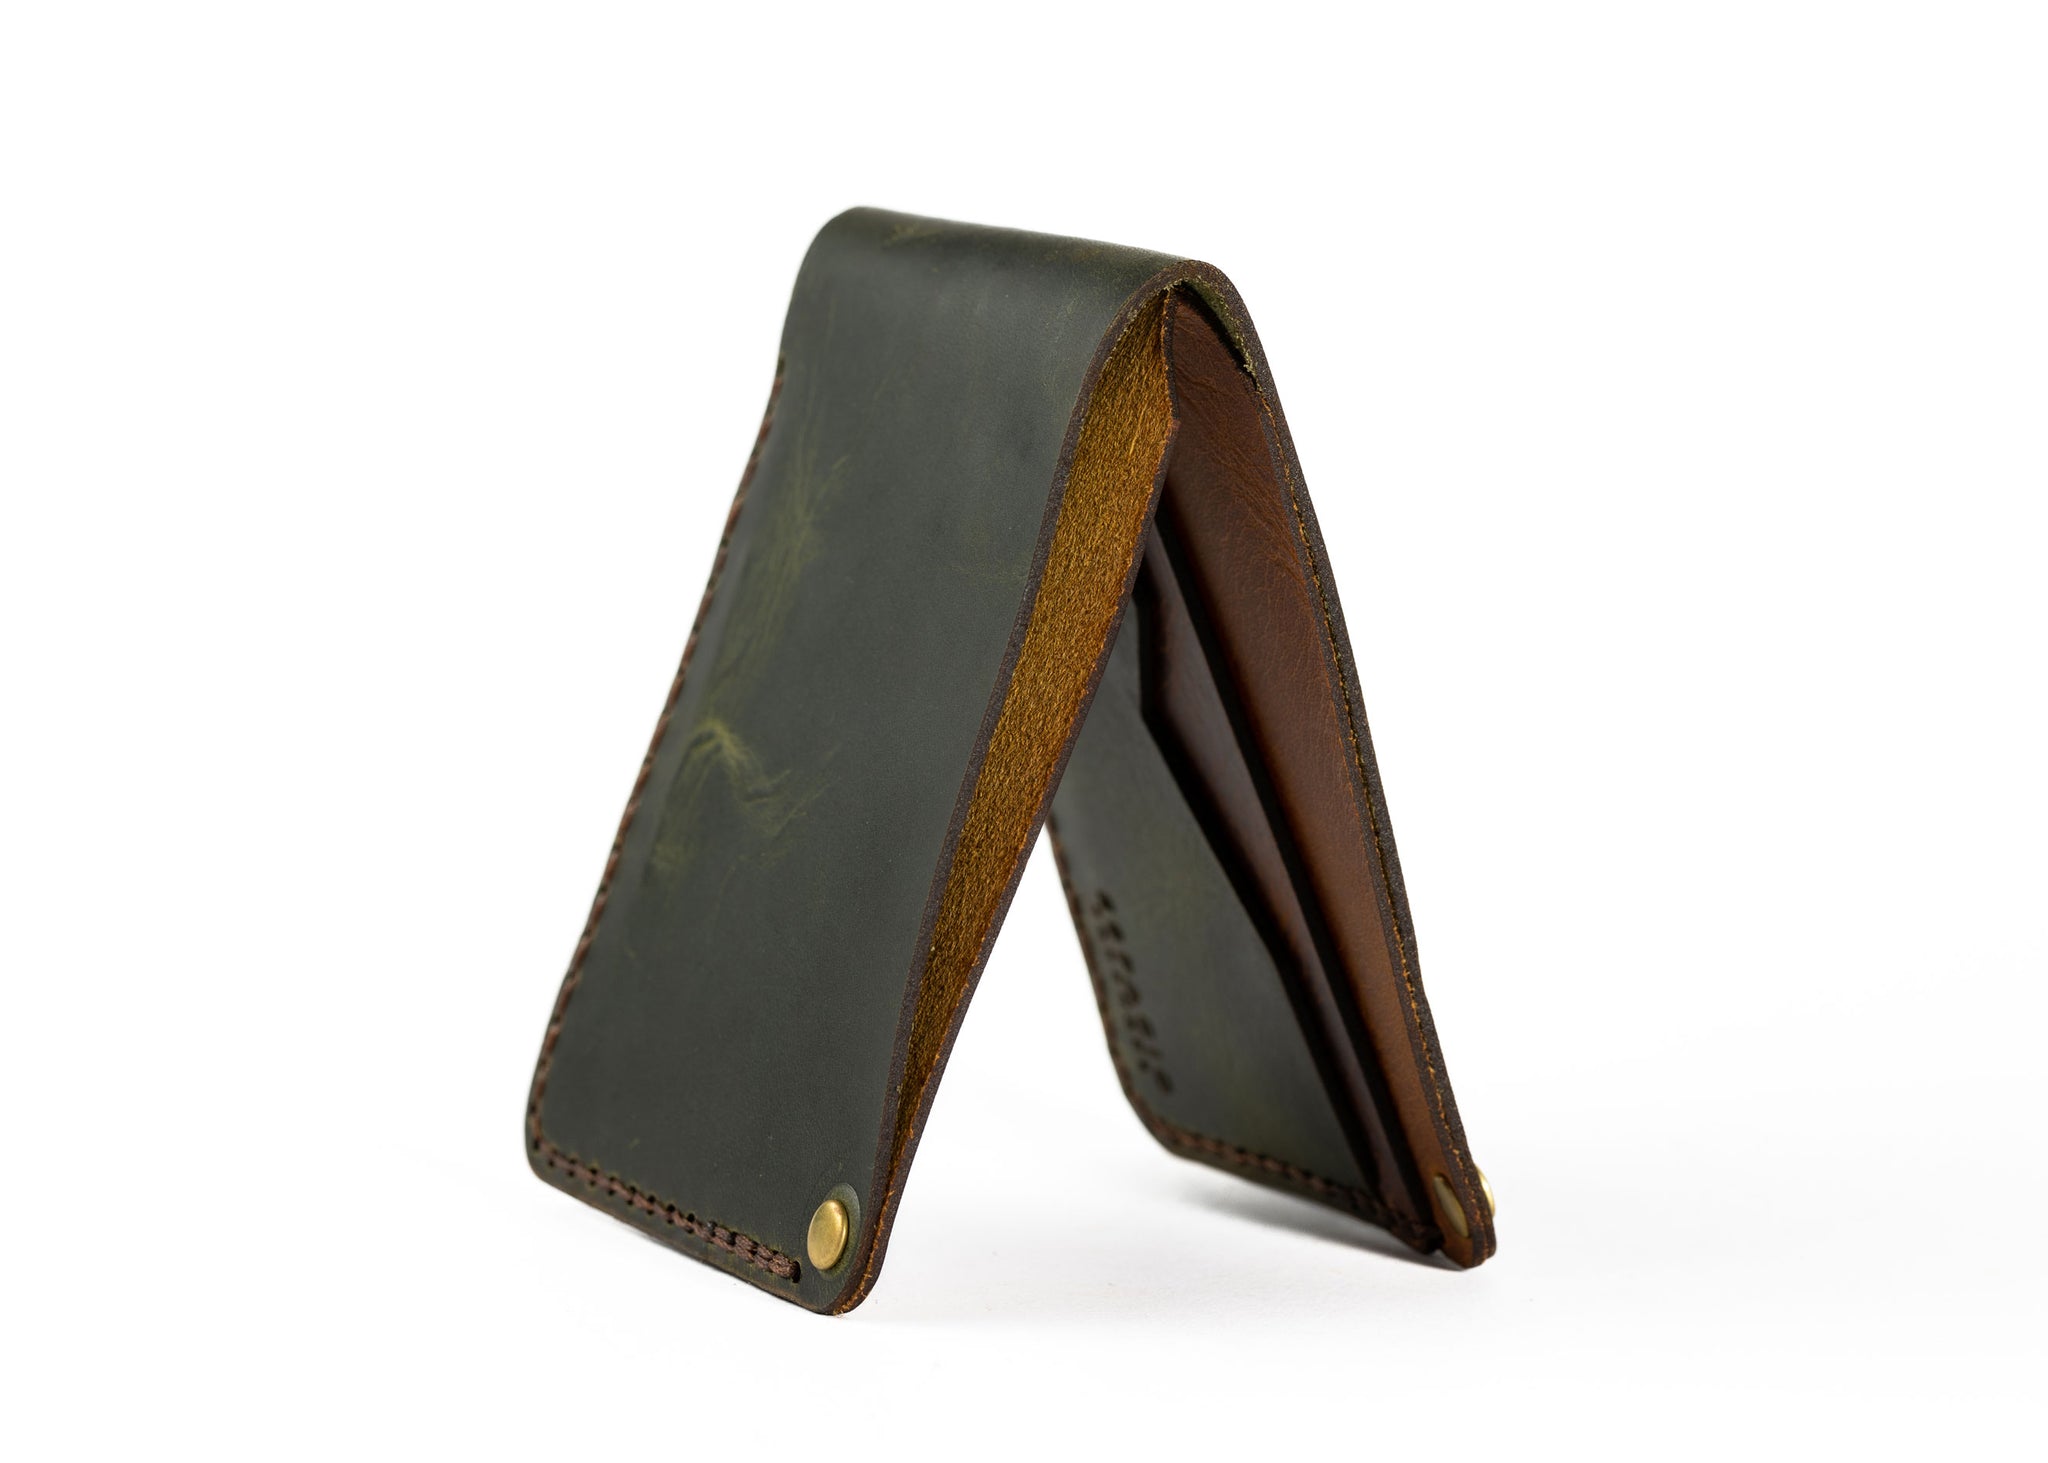 Gringo Bifold Leather Wallet